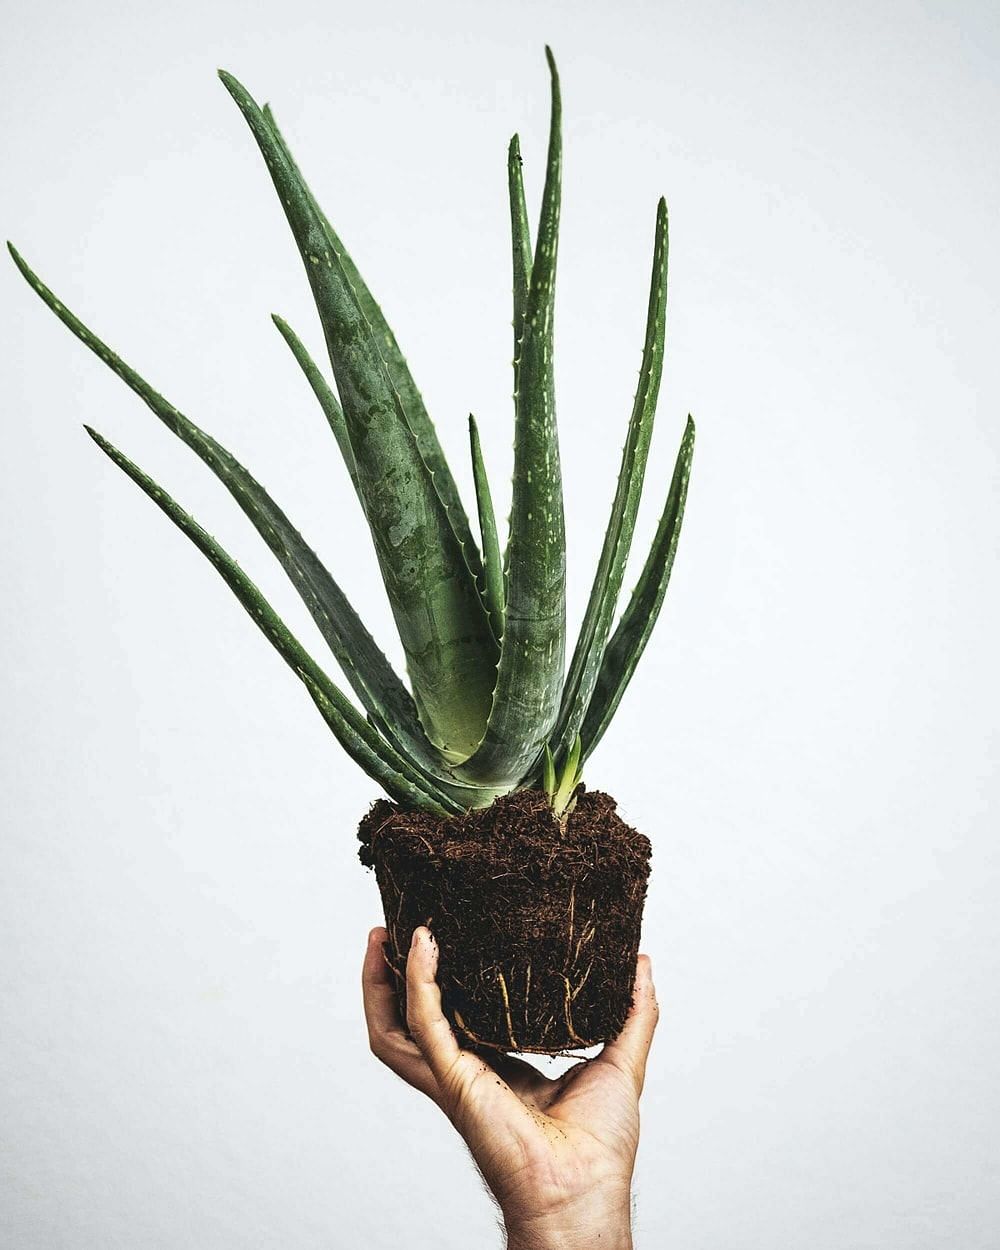 6 Ways to Use Aloe Vera for Dry Scalp - eMediHealth